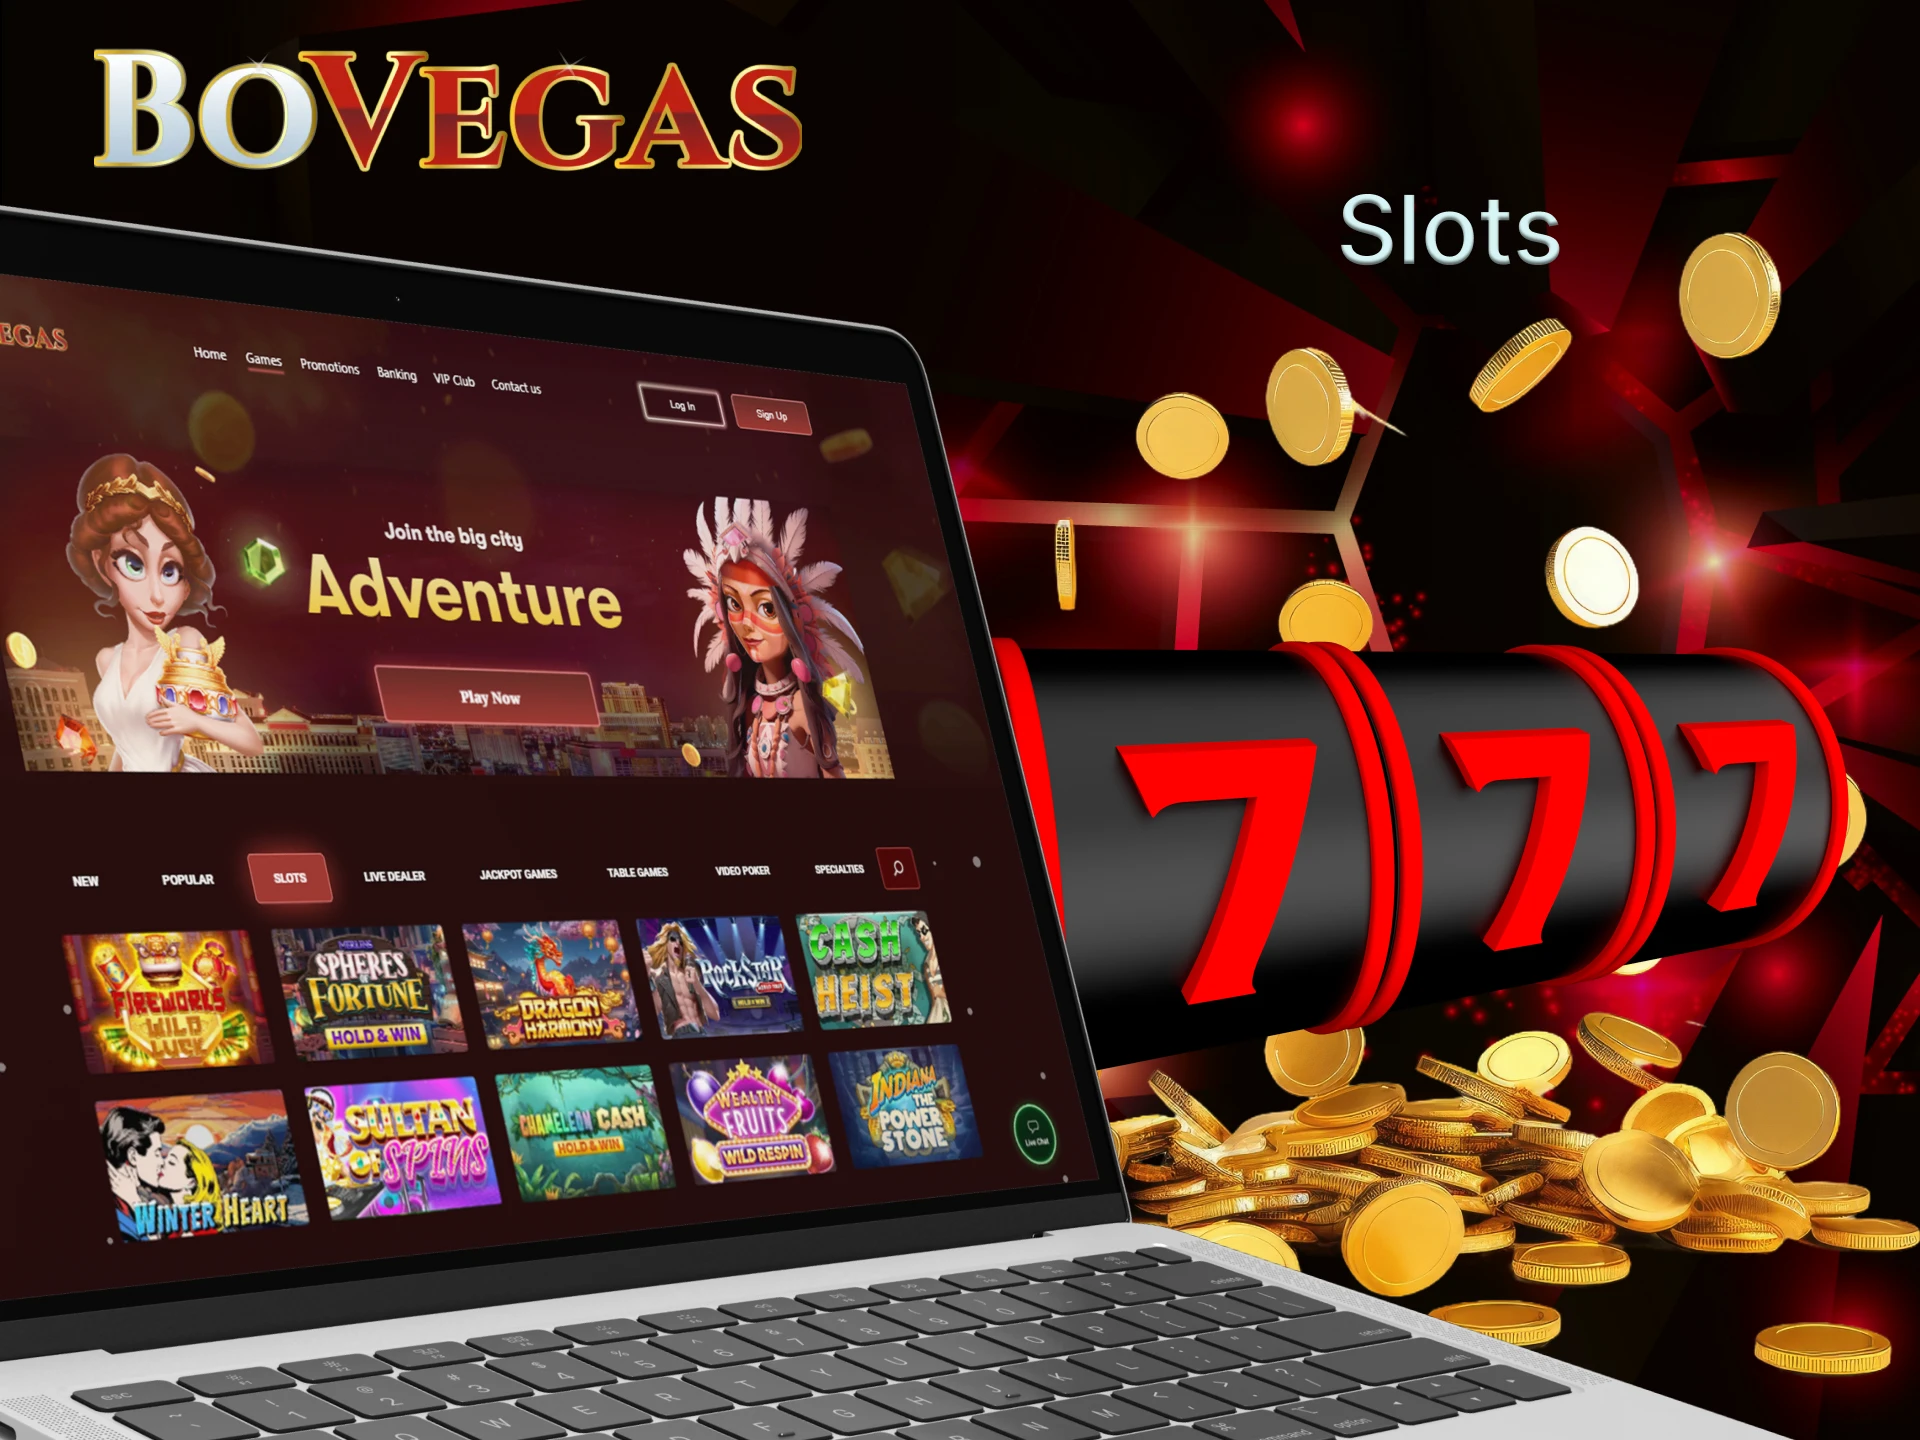 Slots are a major games category in BoVegas Australia casino.